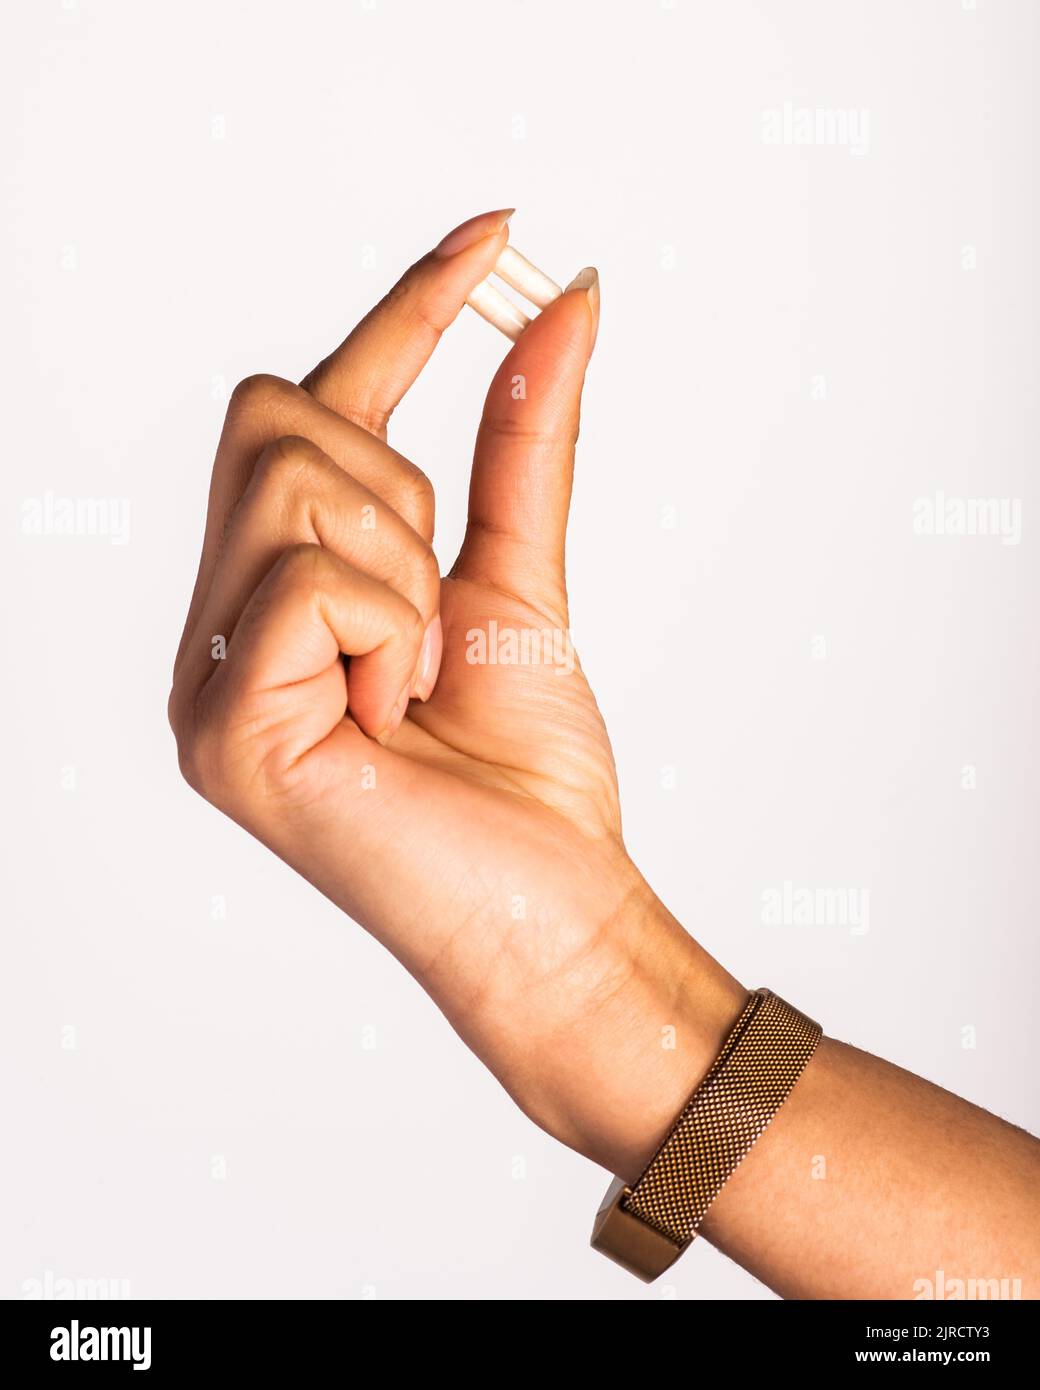 Hand holding vitamin pills, supplements Stock Photo